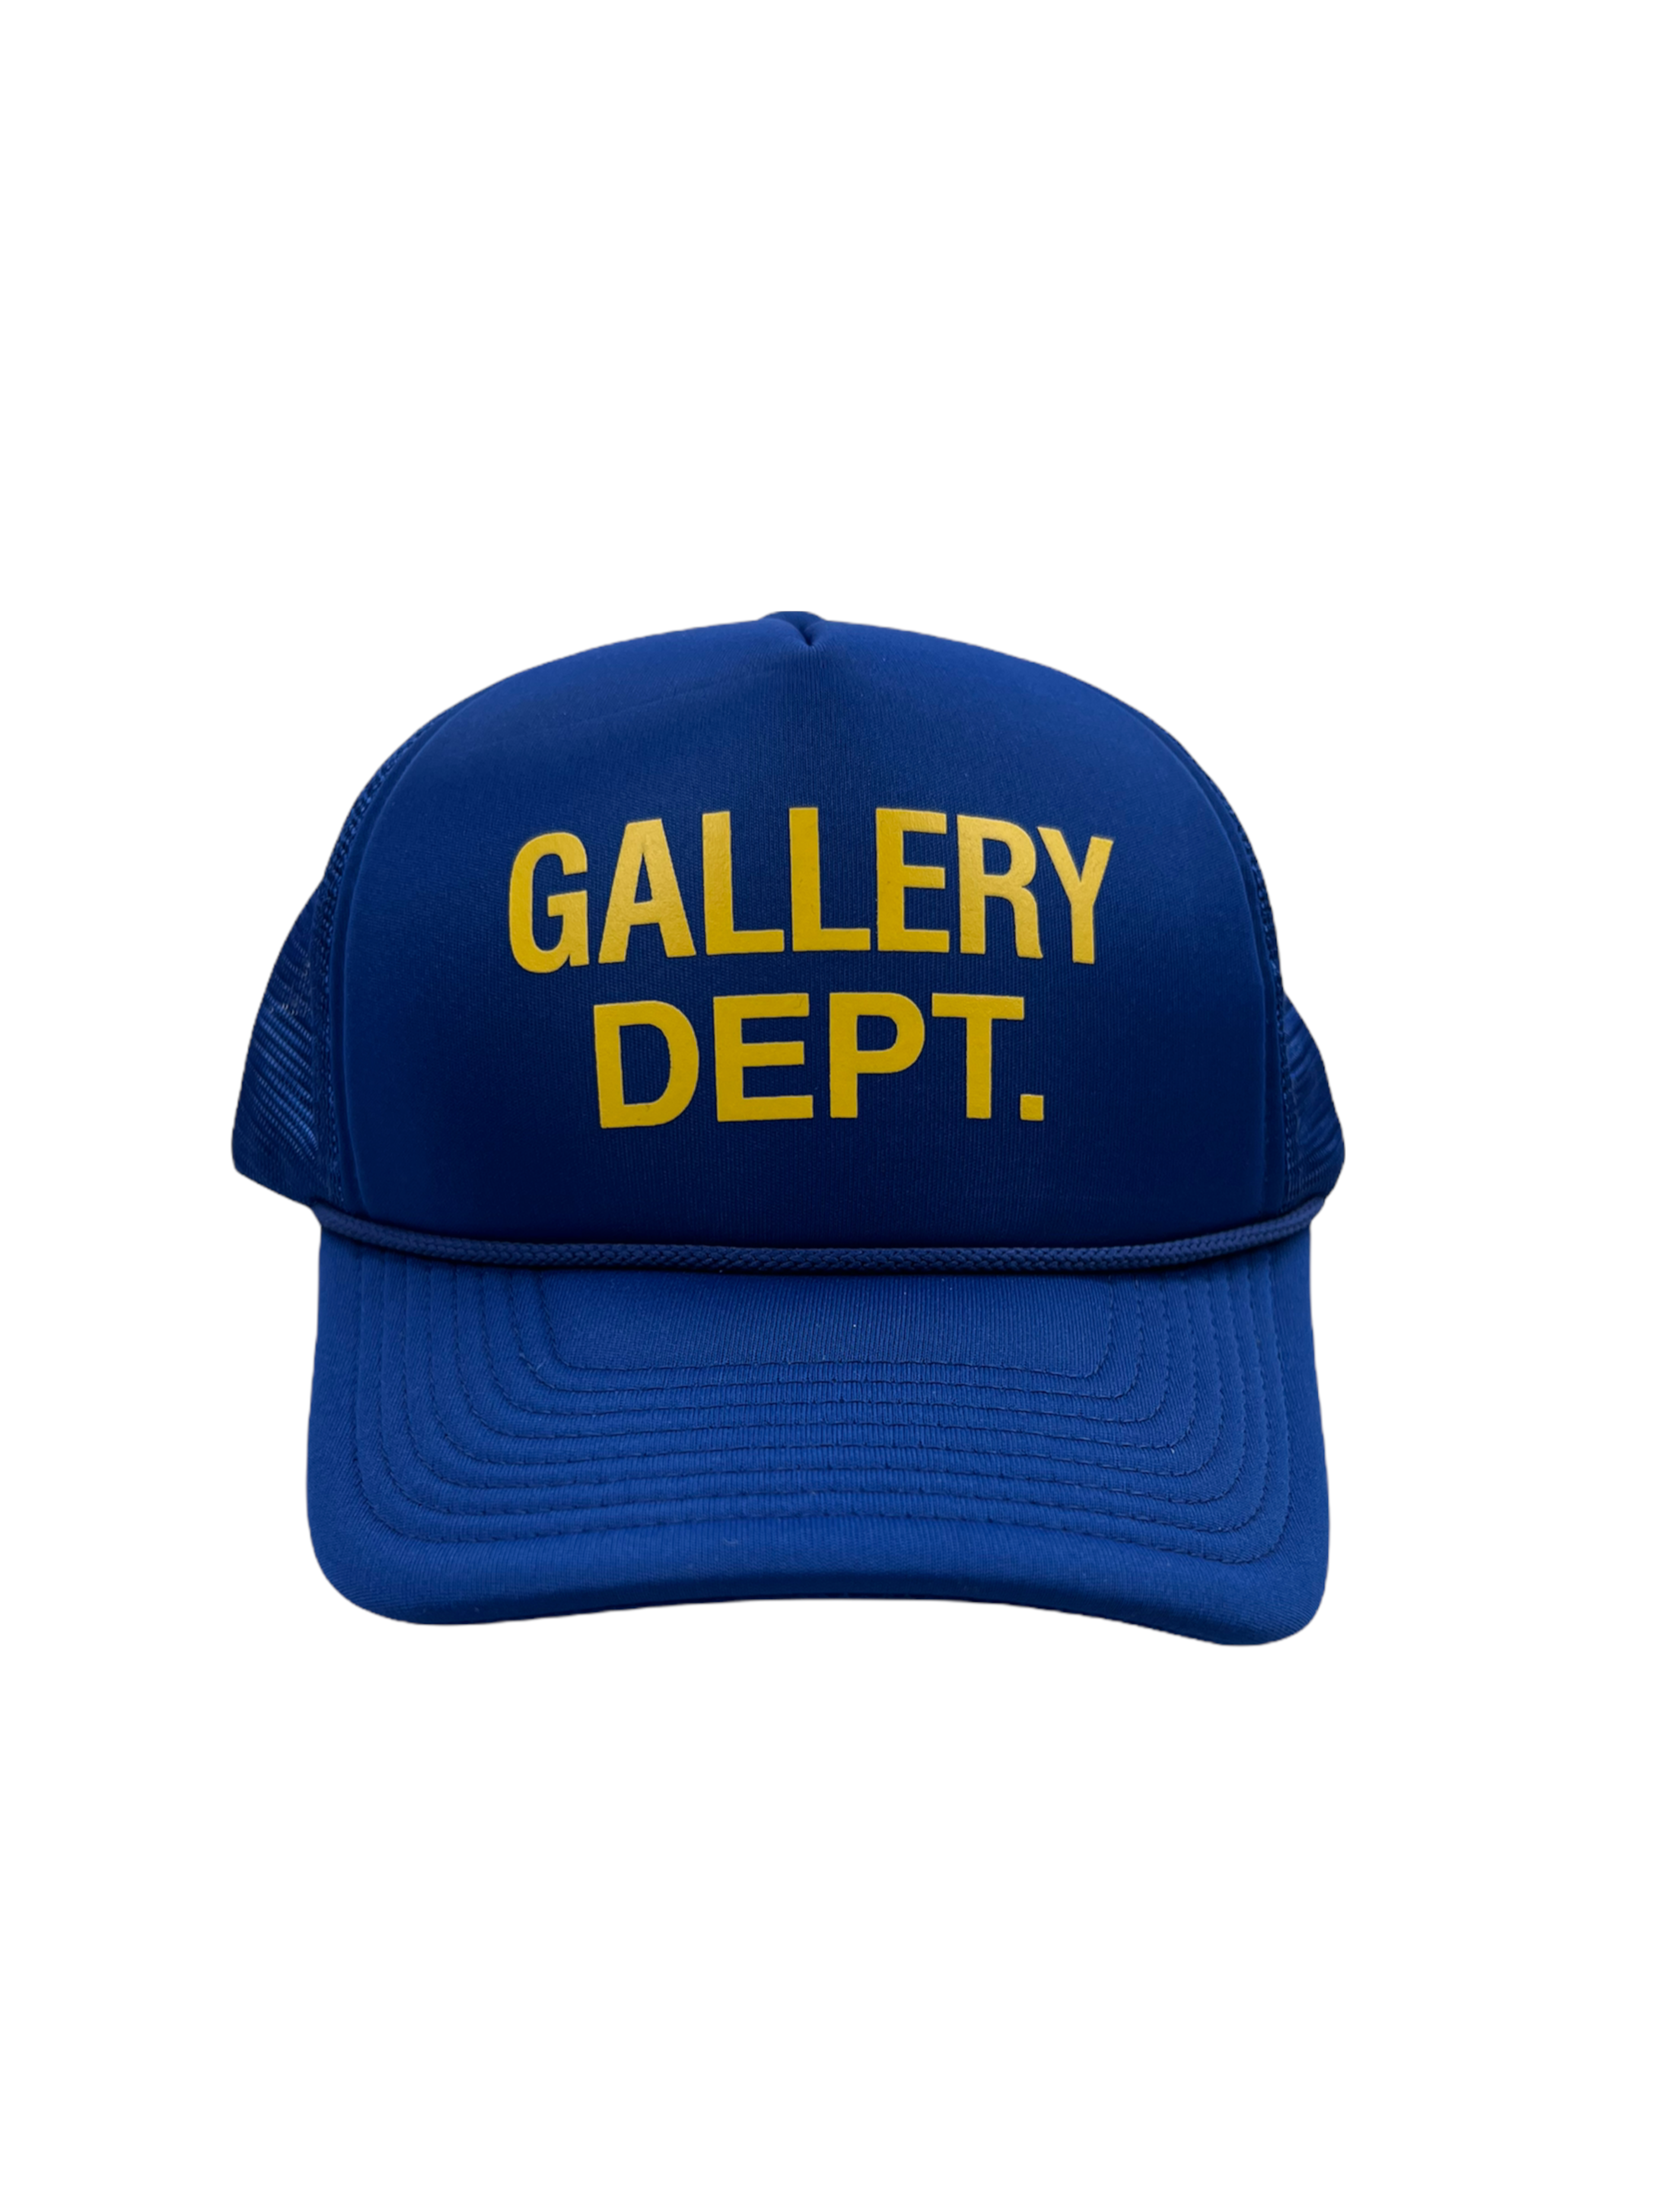 Gallery Department Logo Trucker Hat Blue Yellow